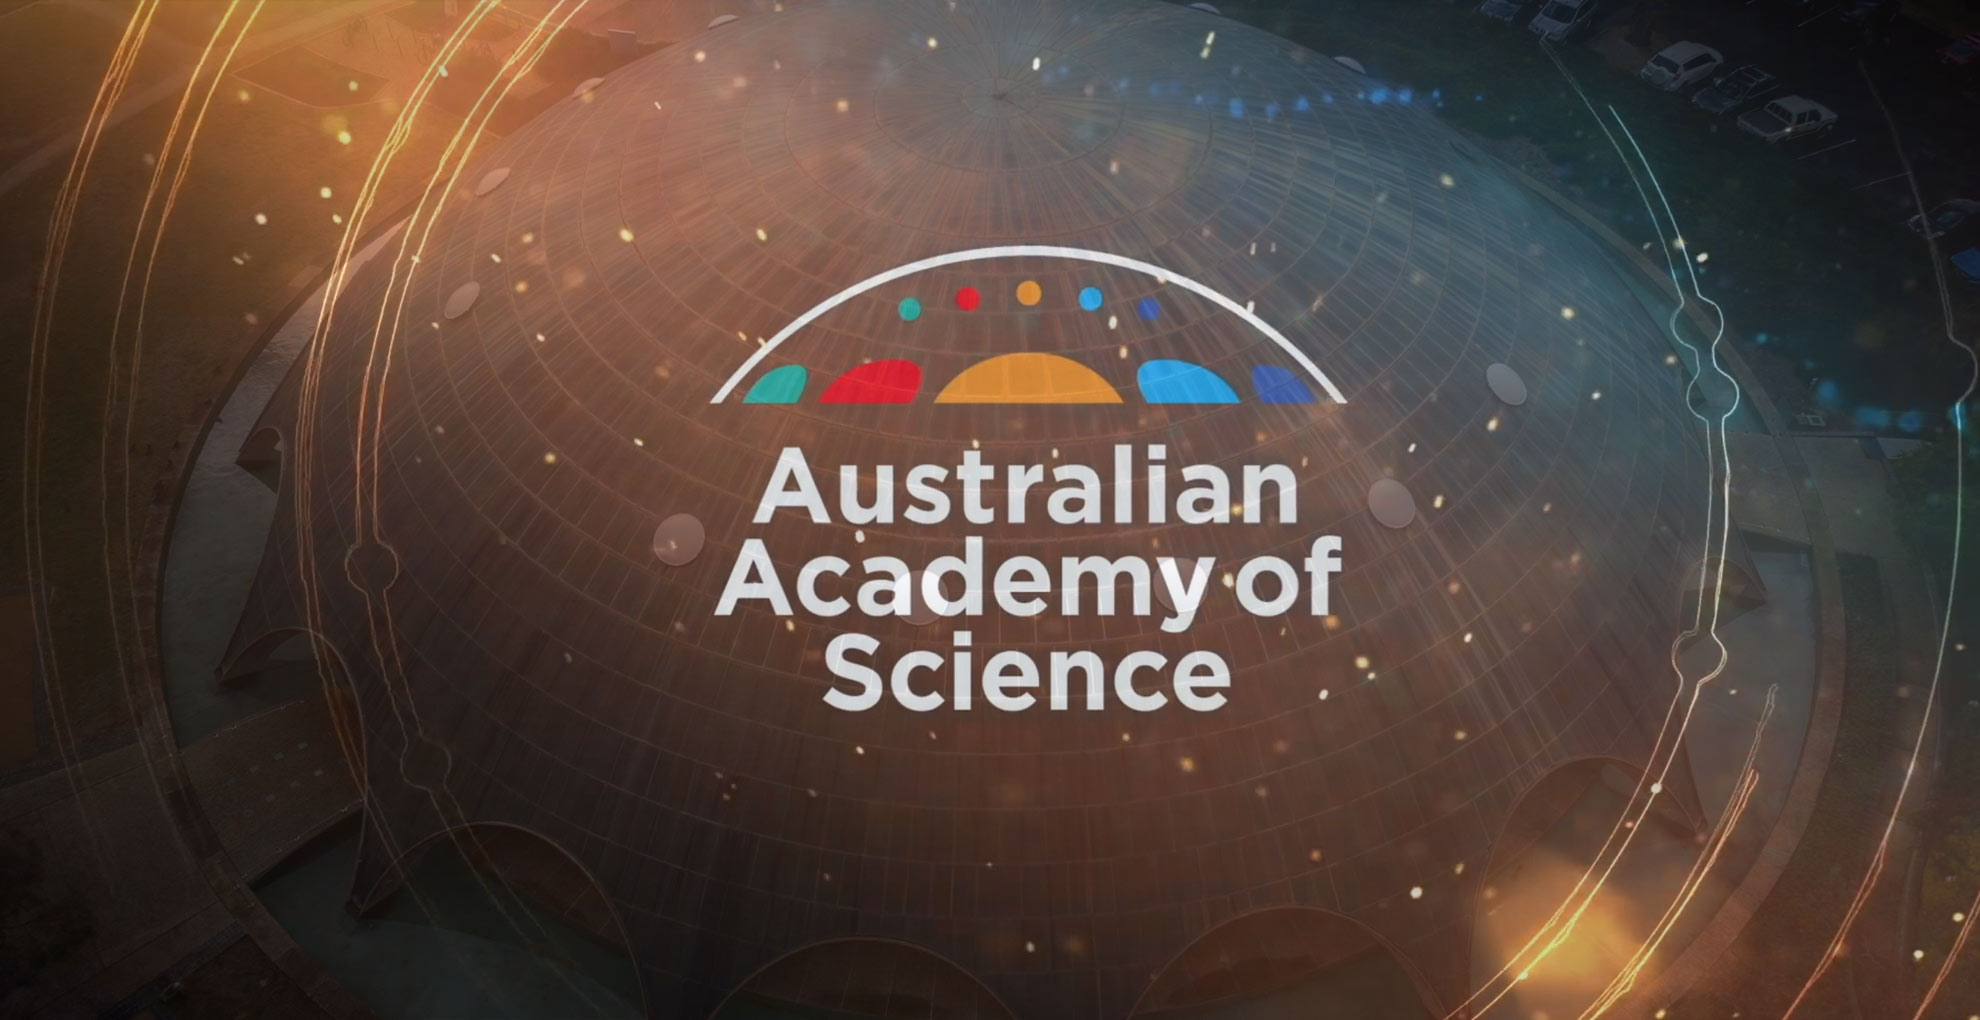 The Australian Academy of Science